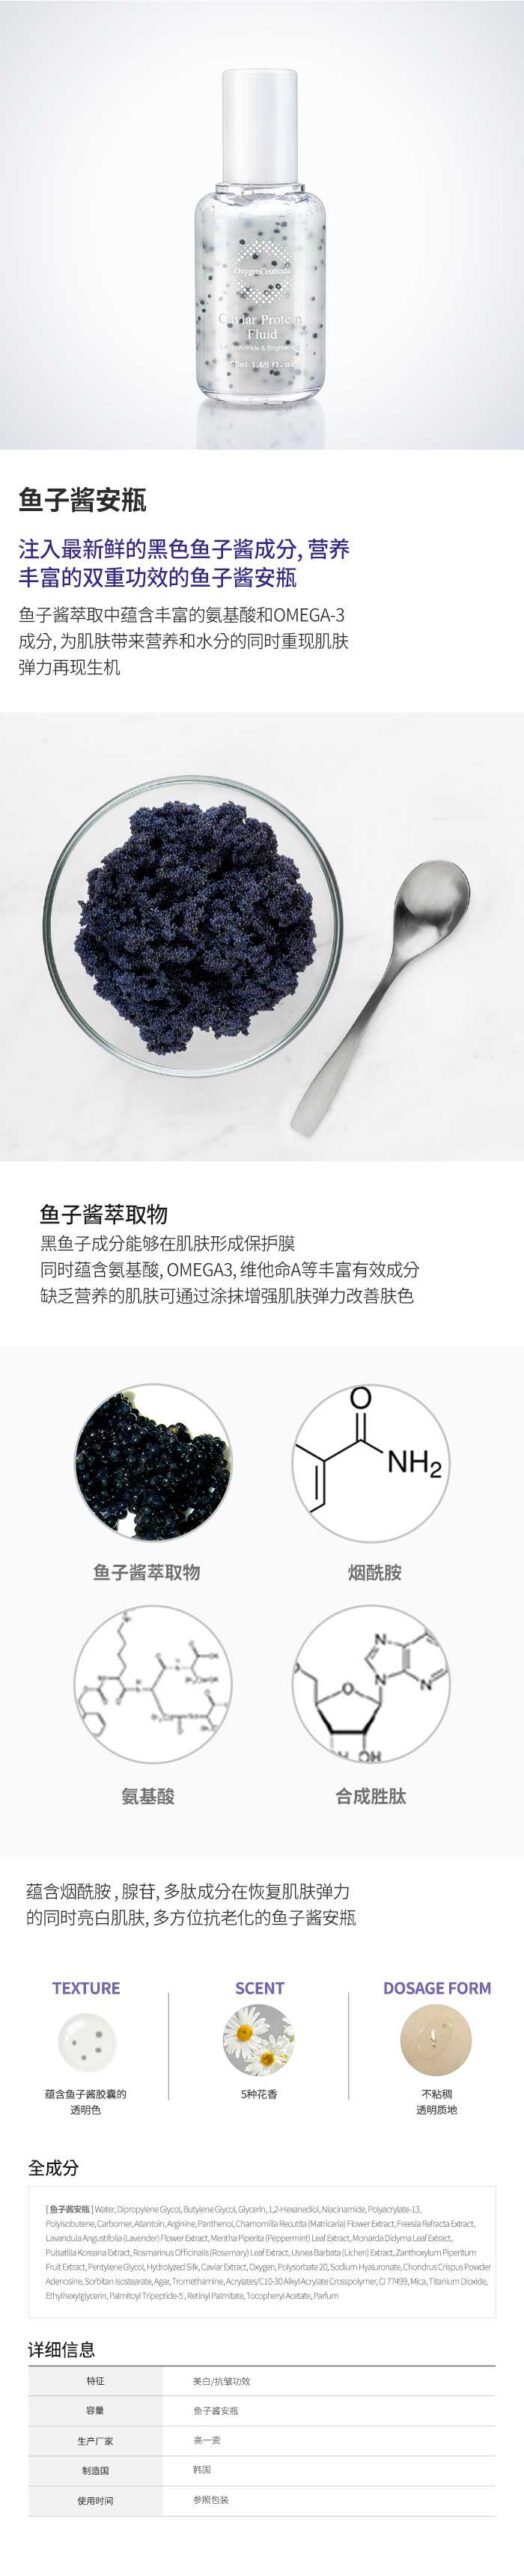 caviar protein dịch trứng cá caviar ampoule: -2